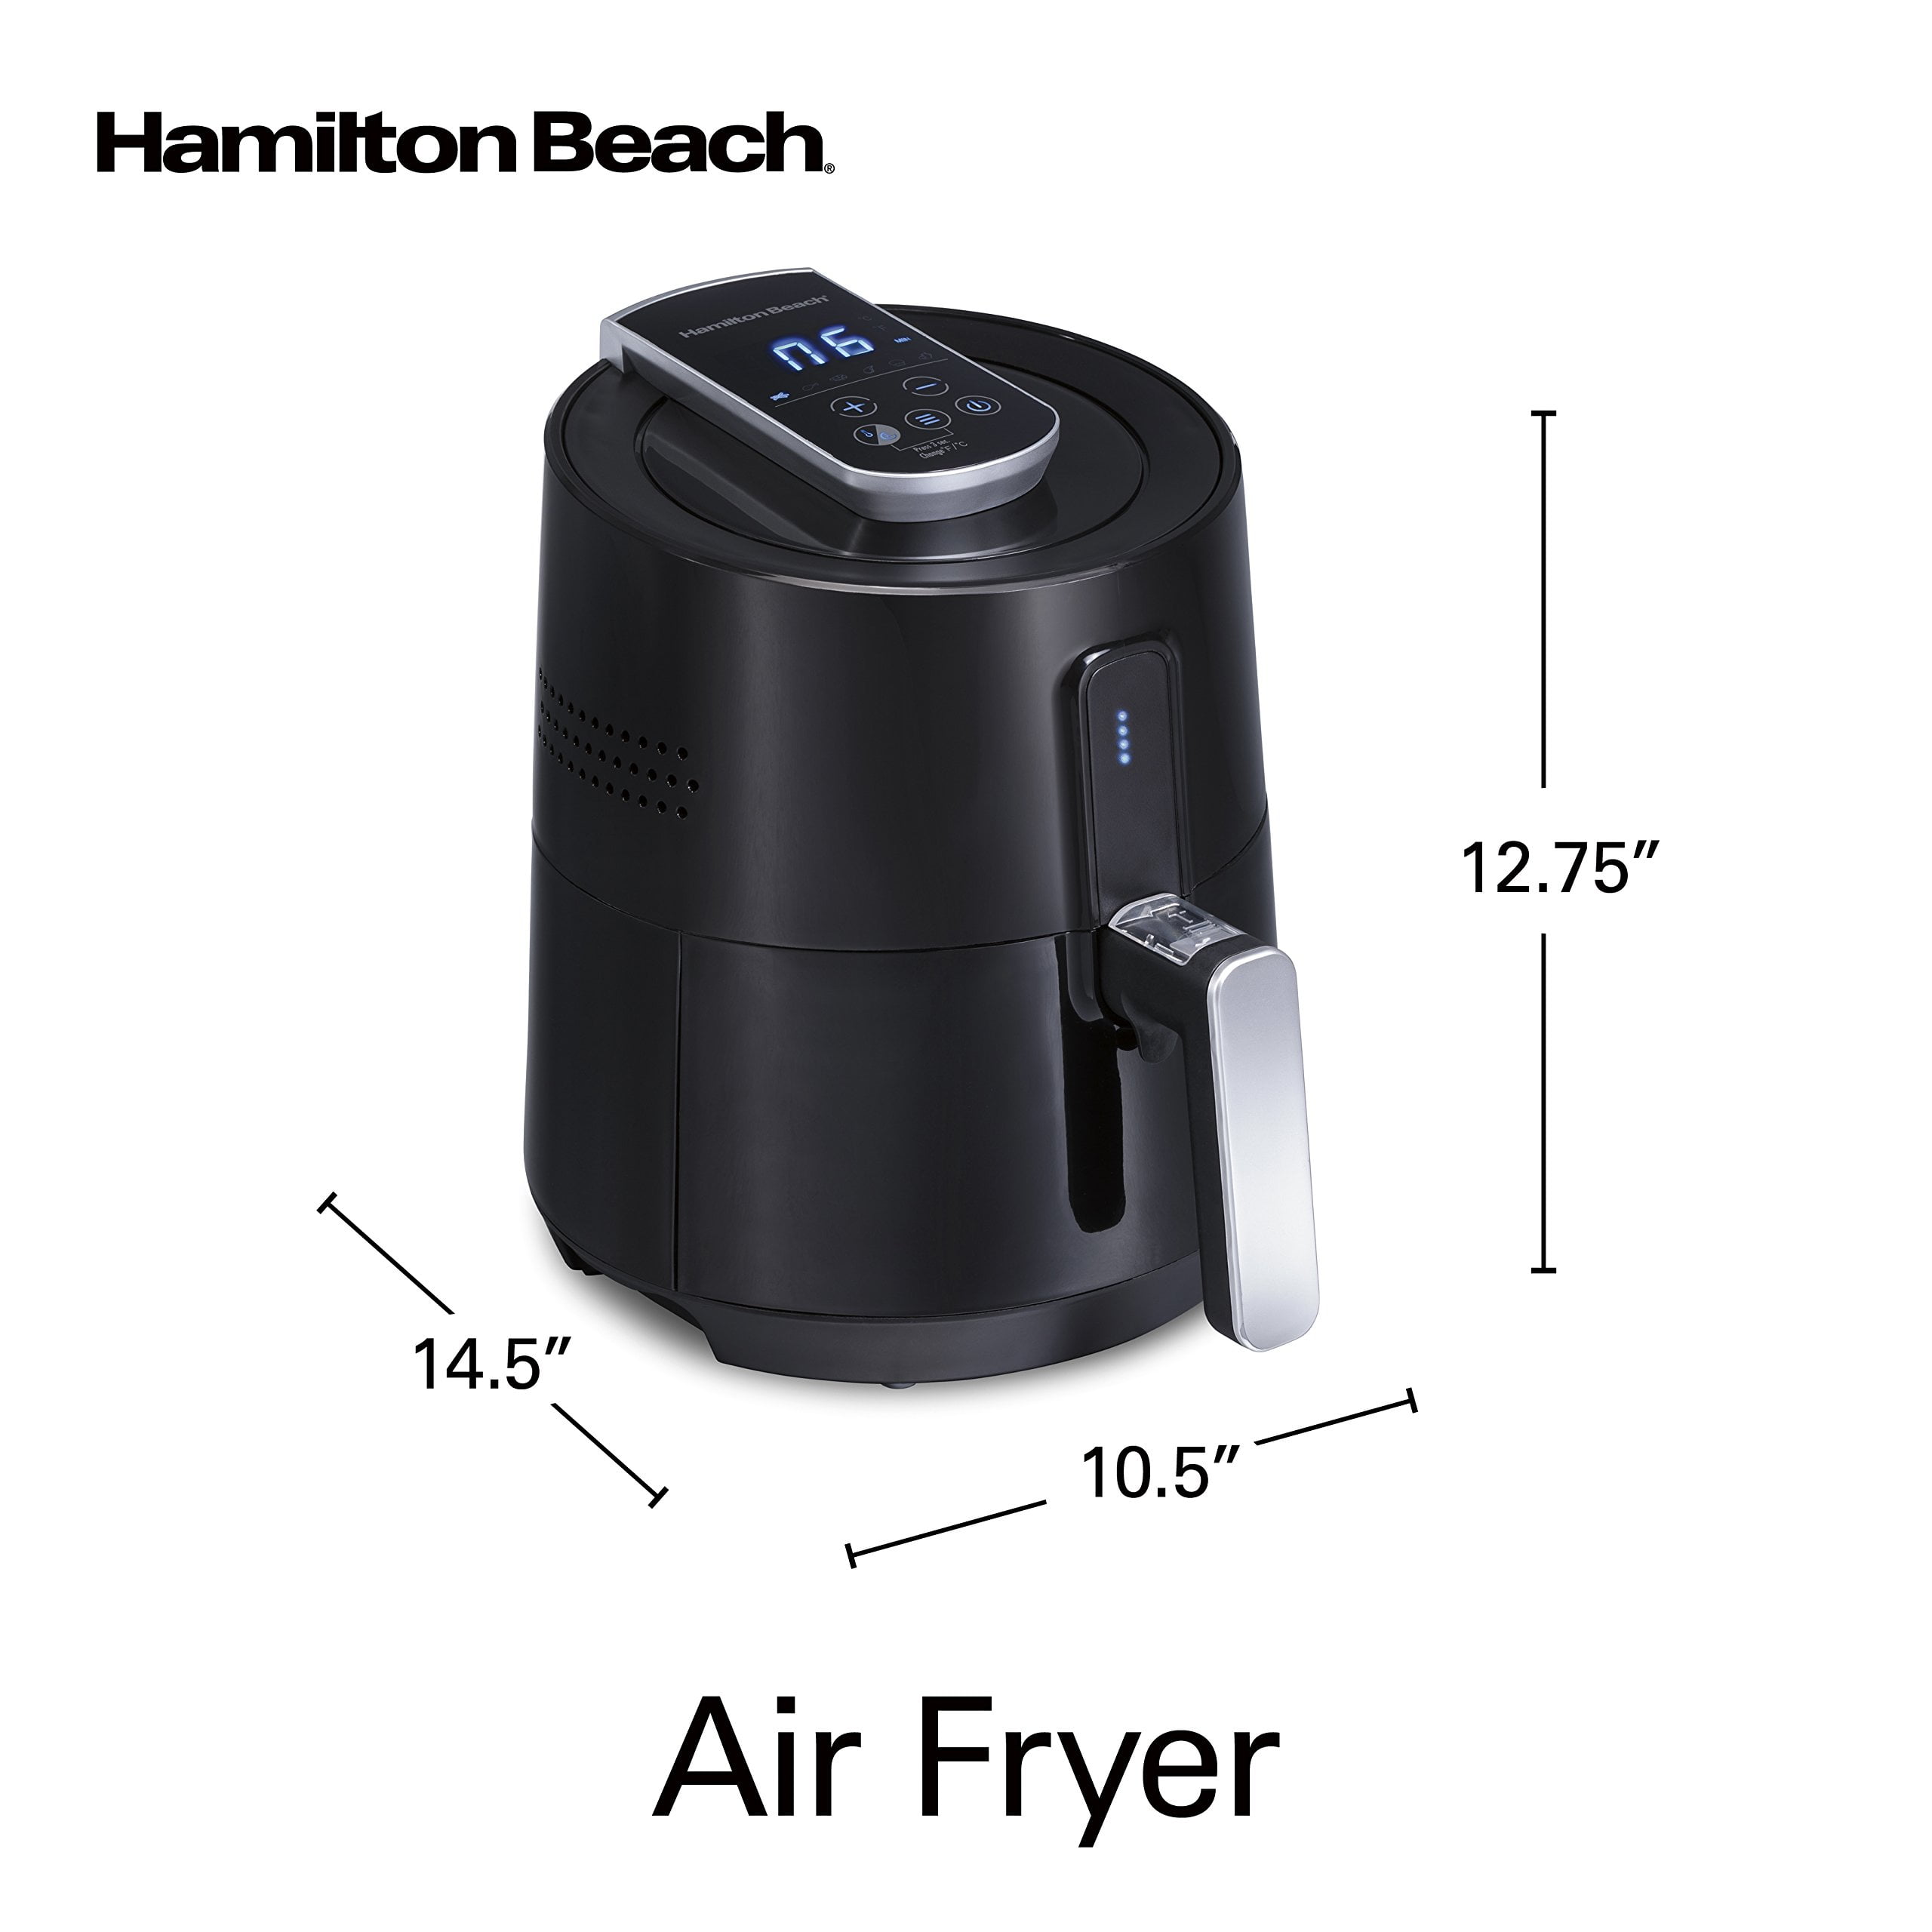 Hamilton Beach 35051 Digital Air Fryer, Large 2.5 Liter Capacity